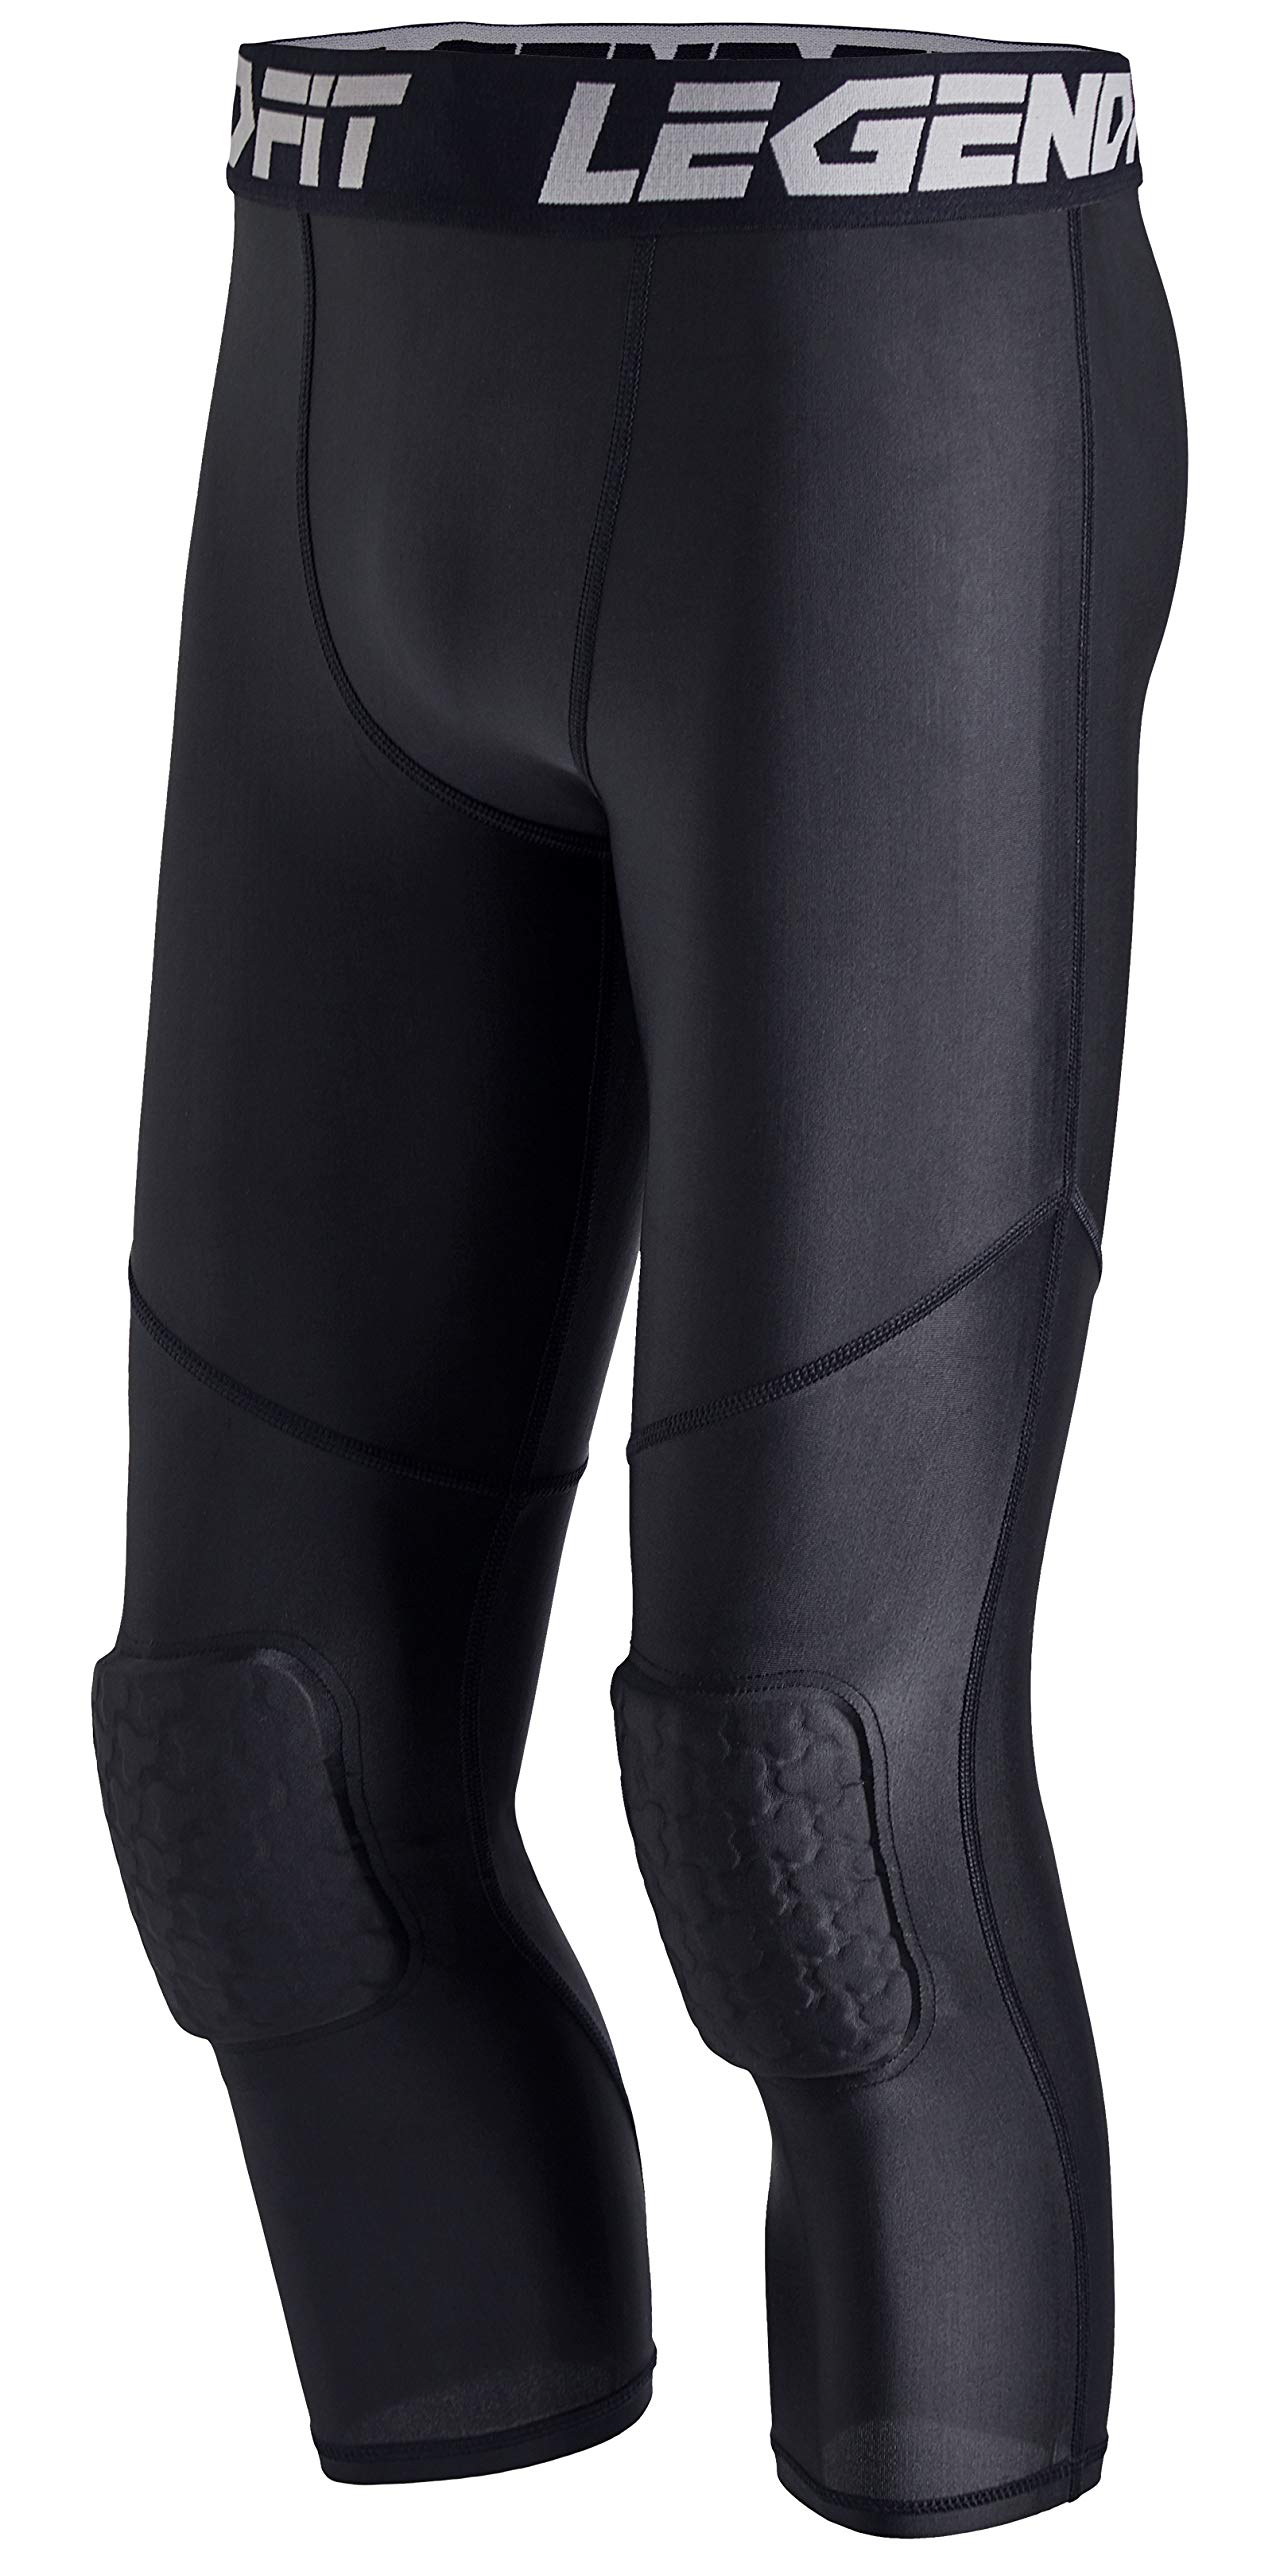 Basketball Pants with Knee Pads, Black/White Knee Pads Compression Pants,  3/4 Capri Leggings